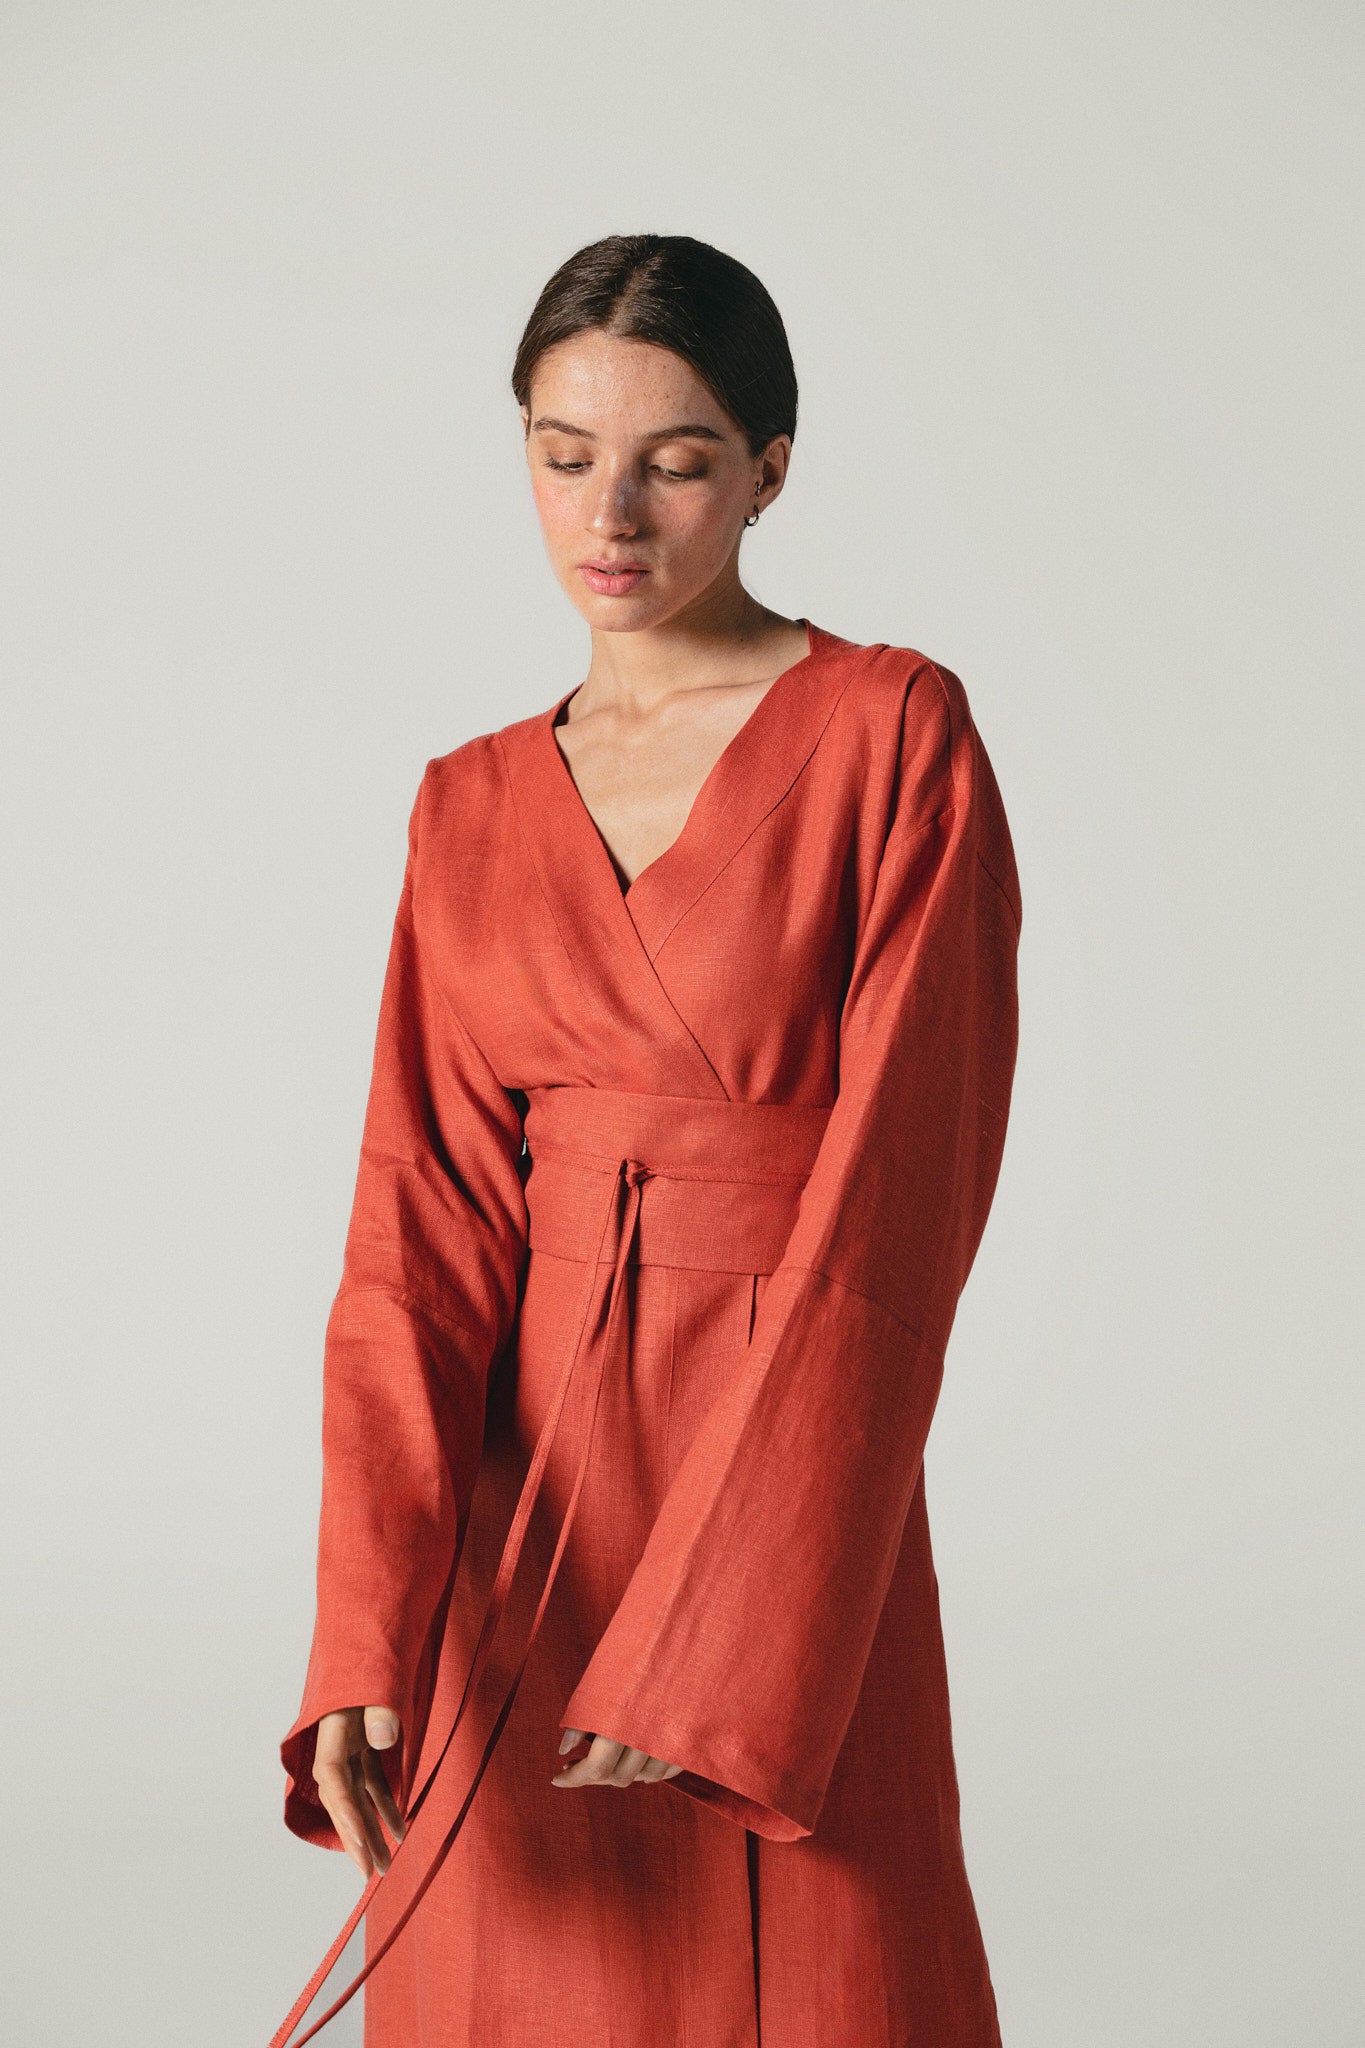 a model wearing a beautiful Terracotta linen kimono dress by atelier mizuni